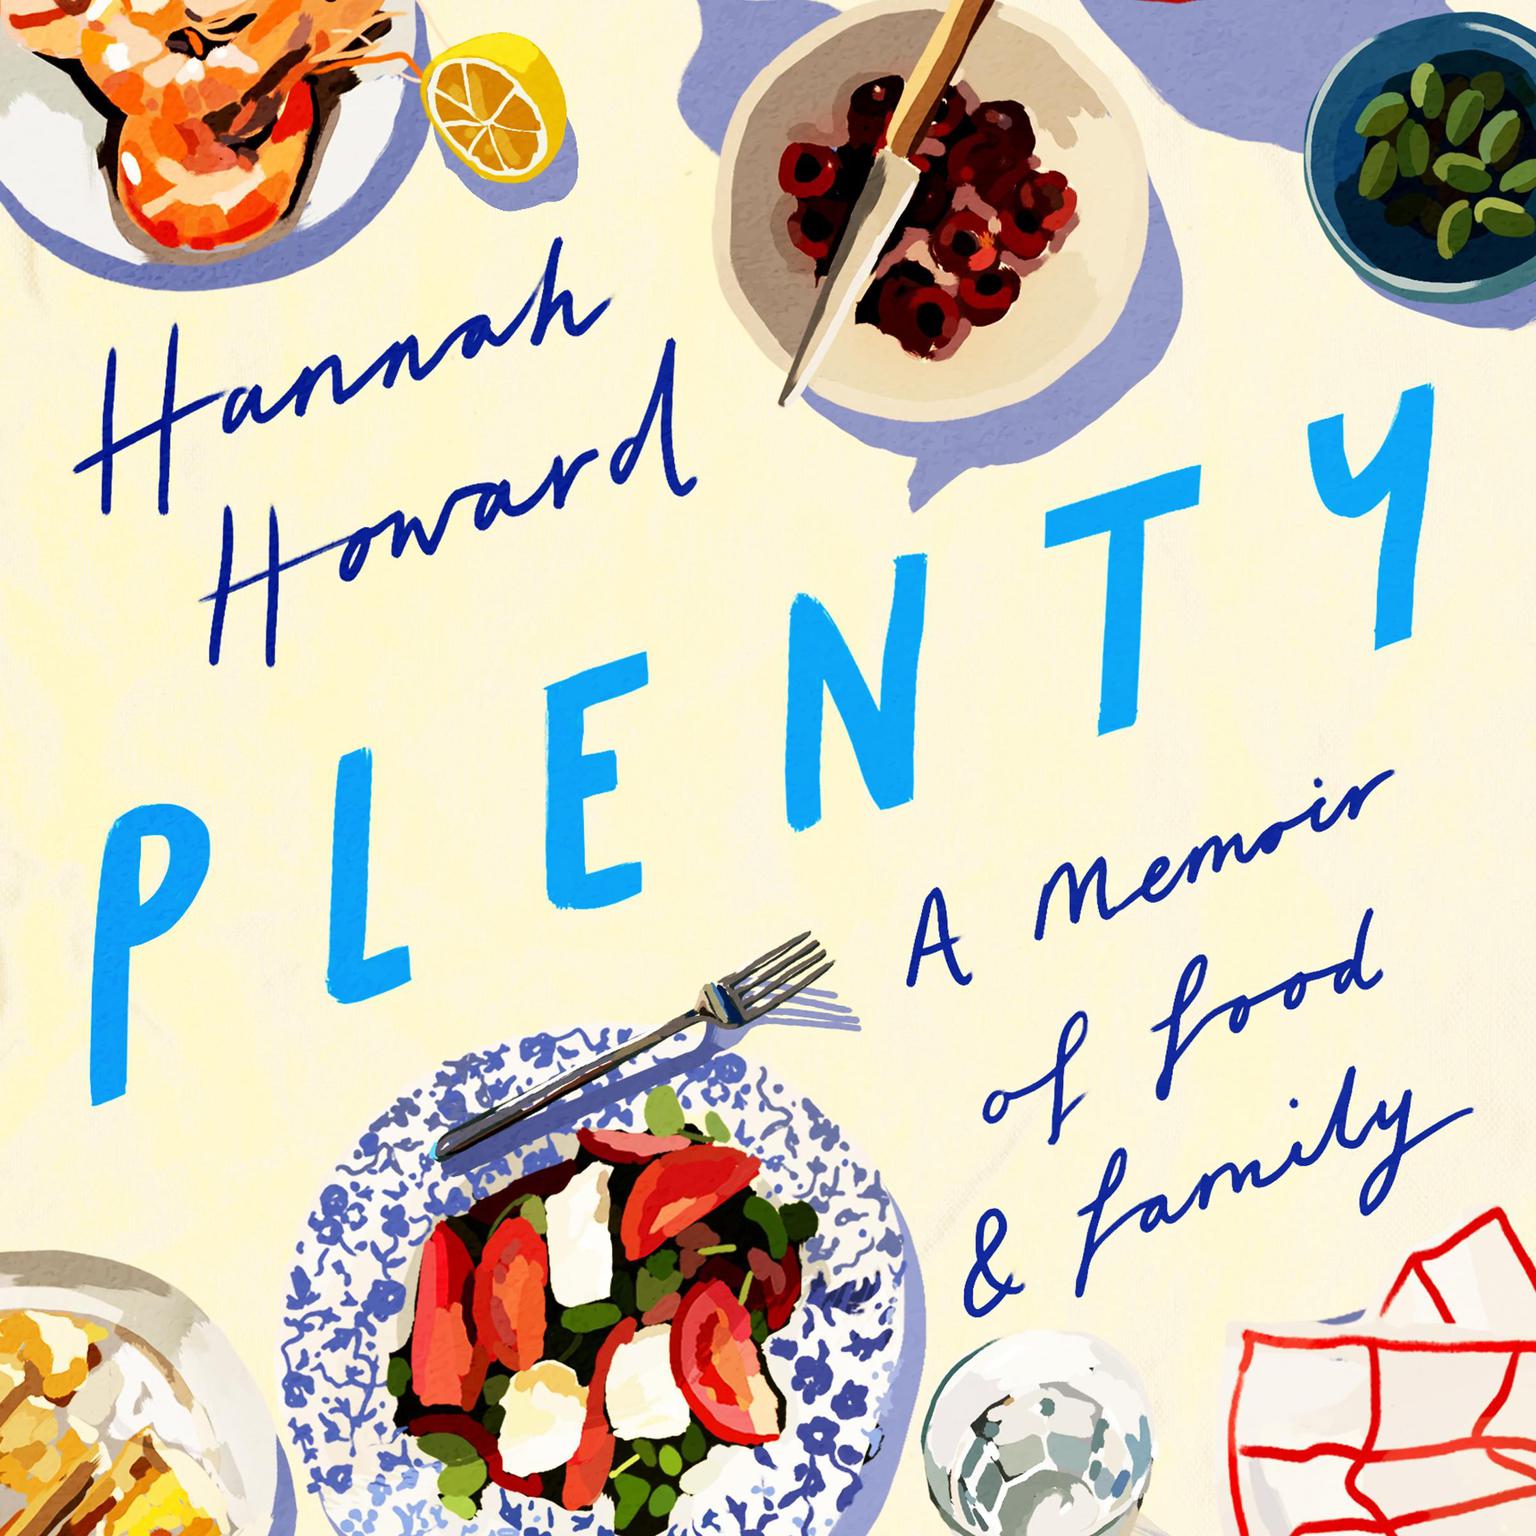 Plenty: A Memoir of Food and Family Audiobook, by Hannah Howard